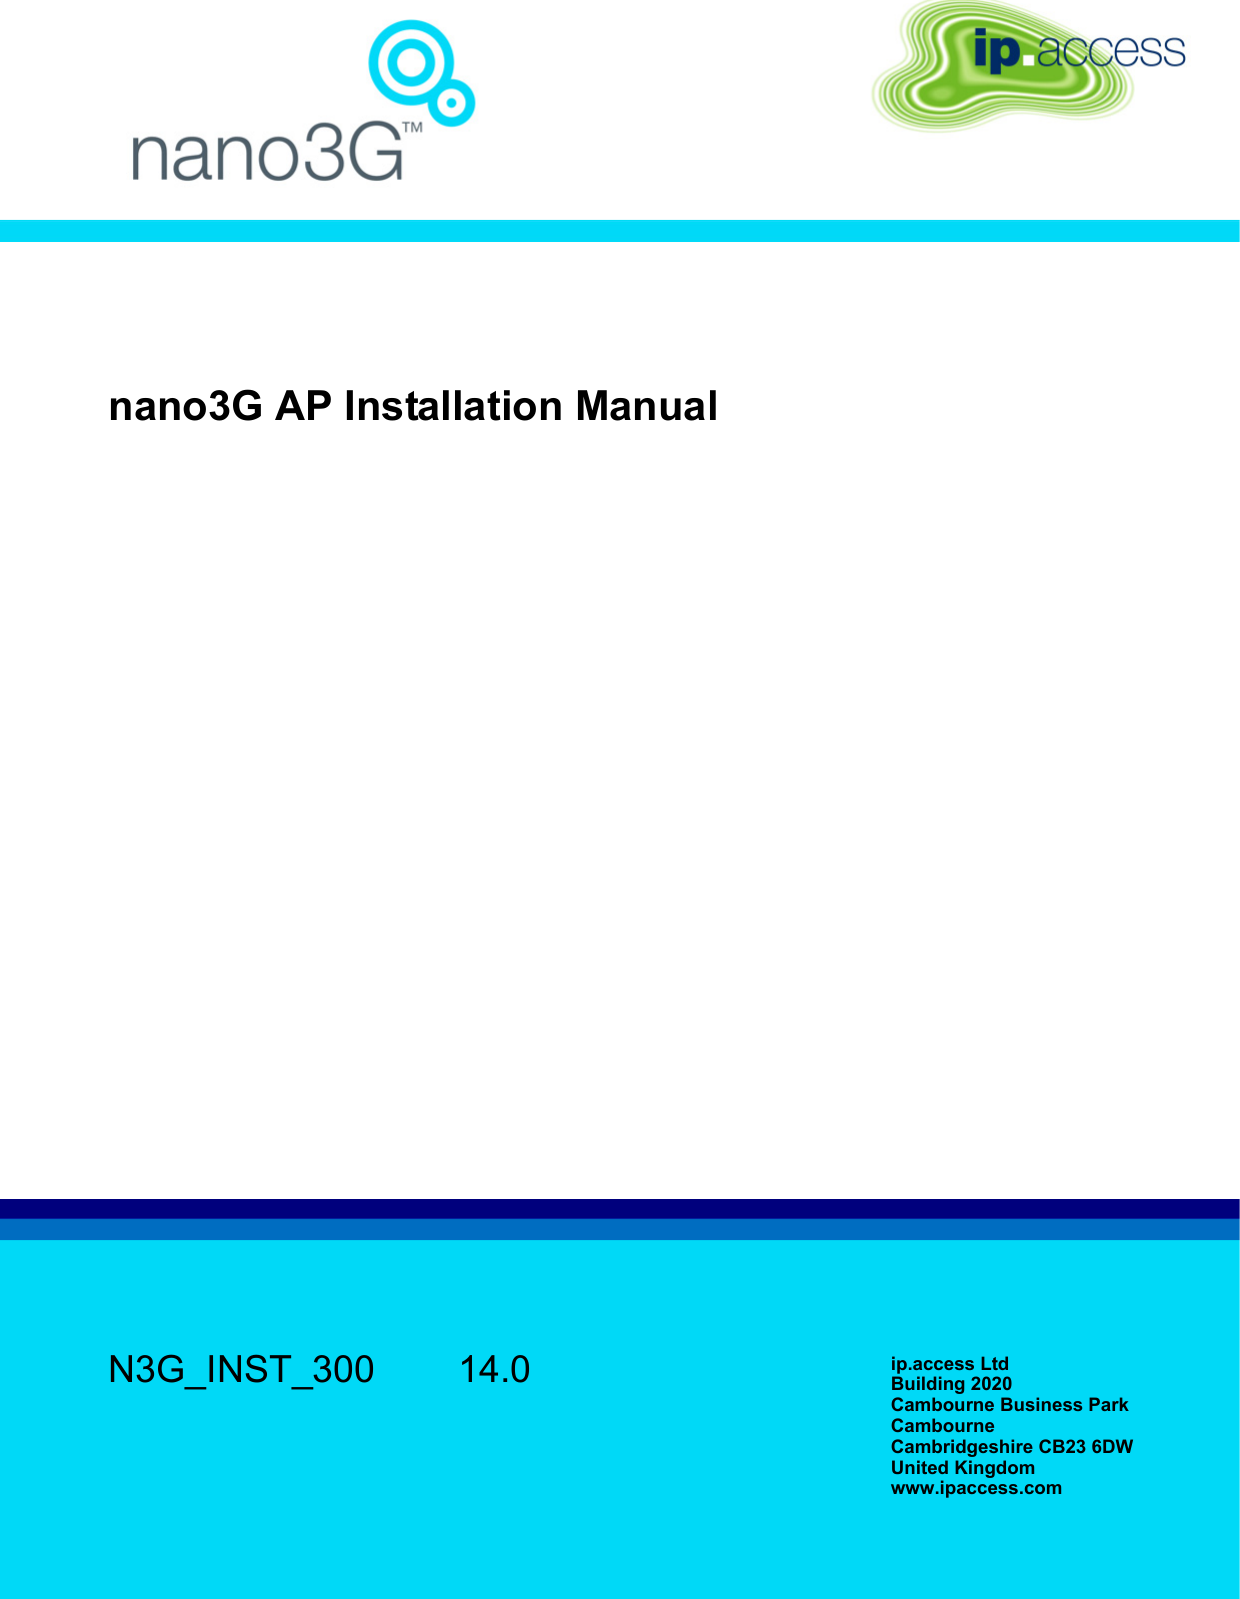 nano3G AP Installation ManualN3G_INST_300 14.0 ip.access LtdBuilding 2020Cambourne Business ParkCambourneCambridgeshire CB23 6DWUnited Kingdomwww.ipaccess.com